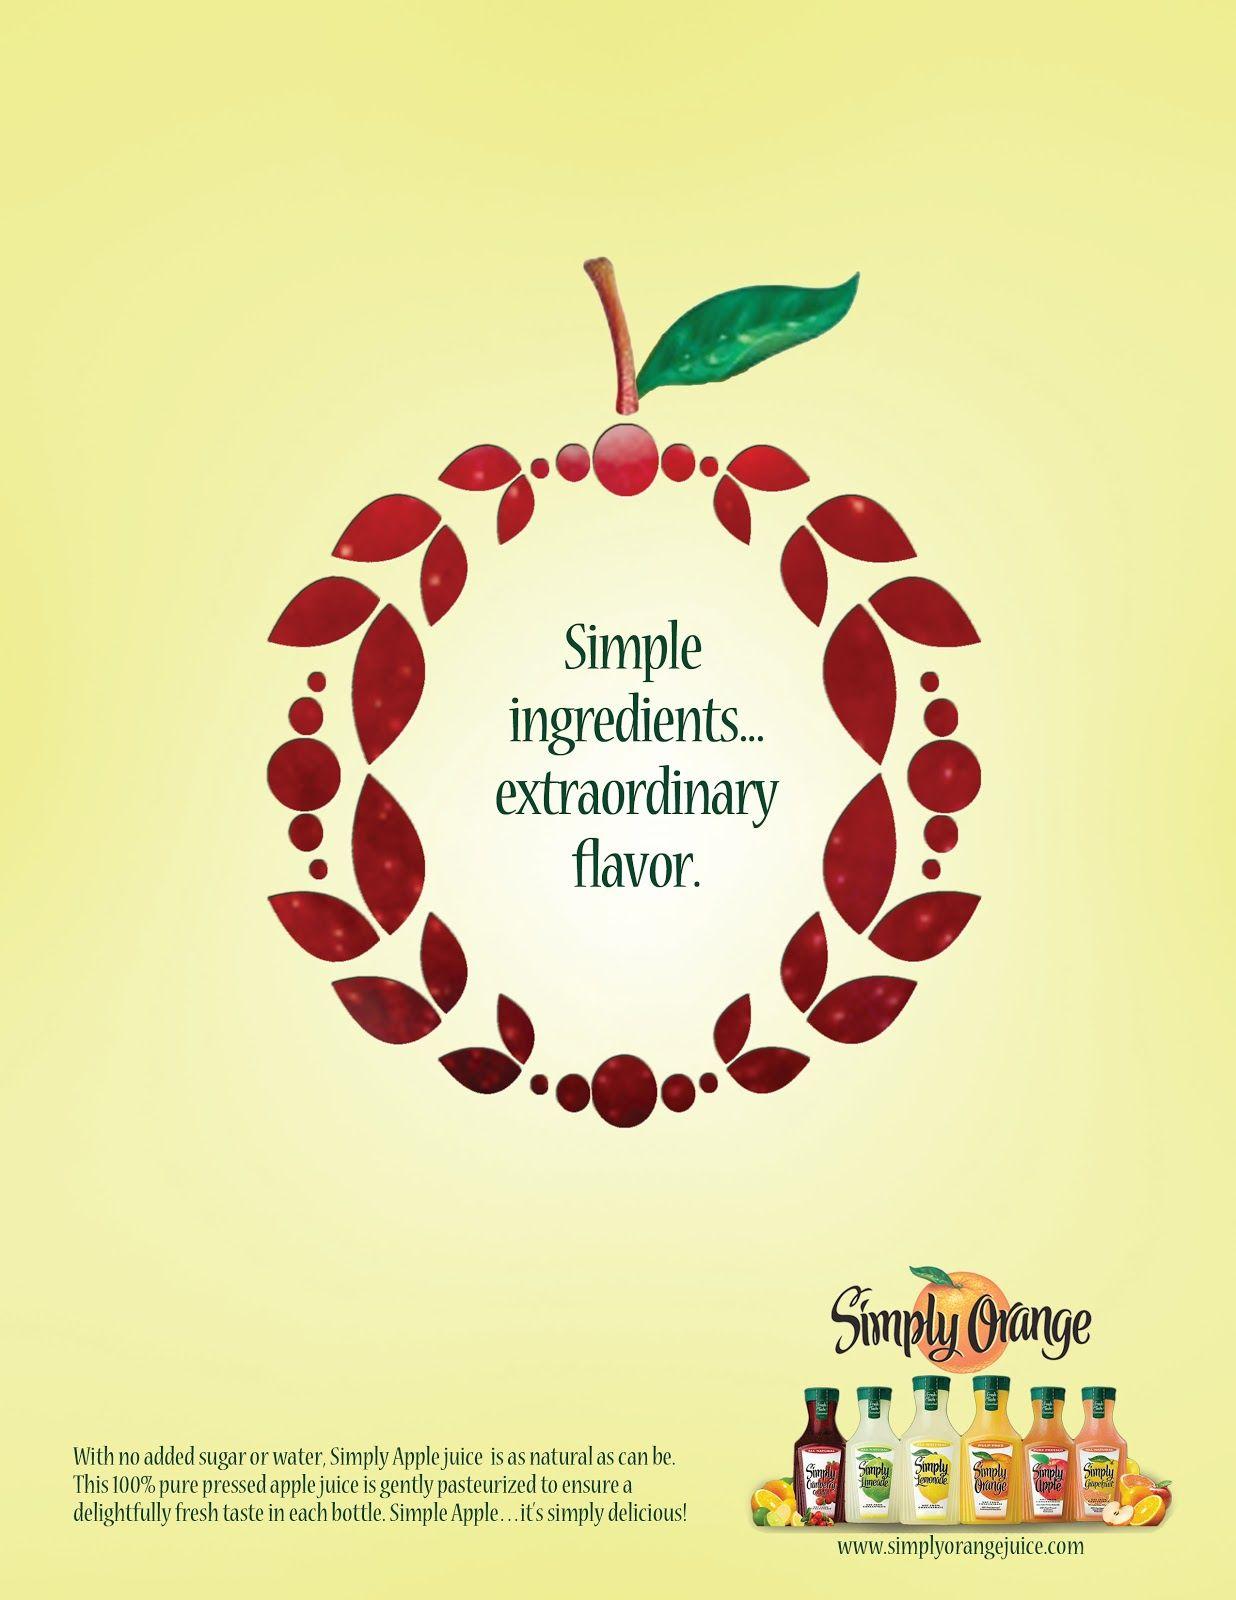 Simply Orange Juice Logo - Joanna's Portfolio: Simply Orange Juice Company Ad Campaign